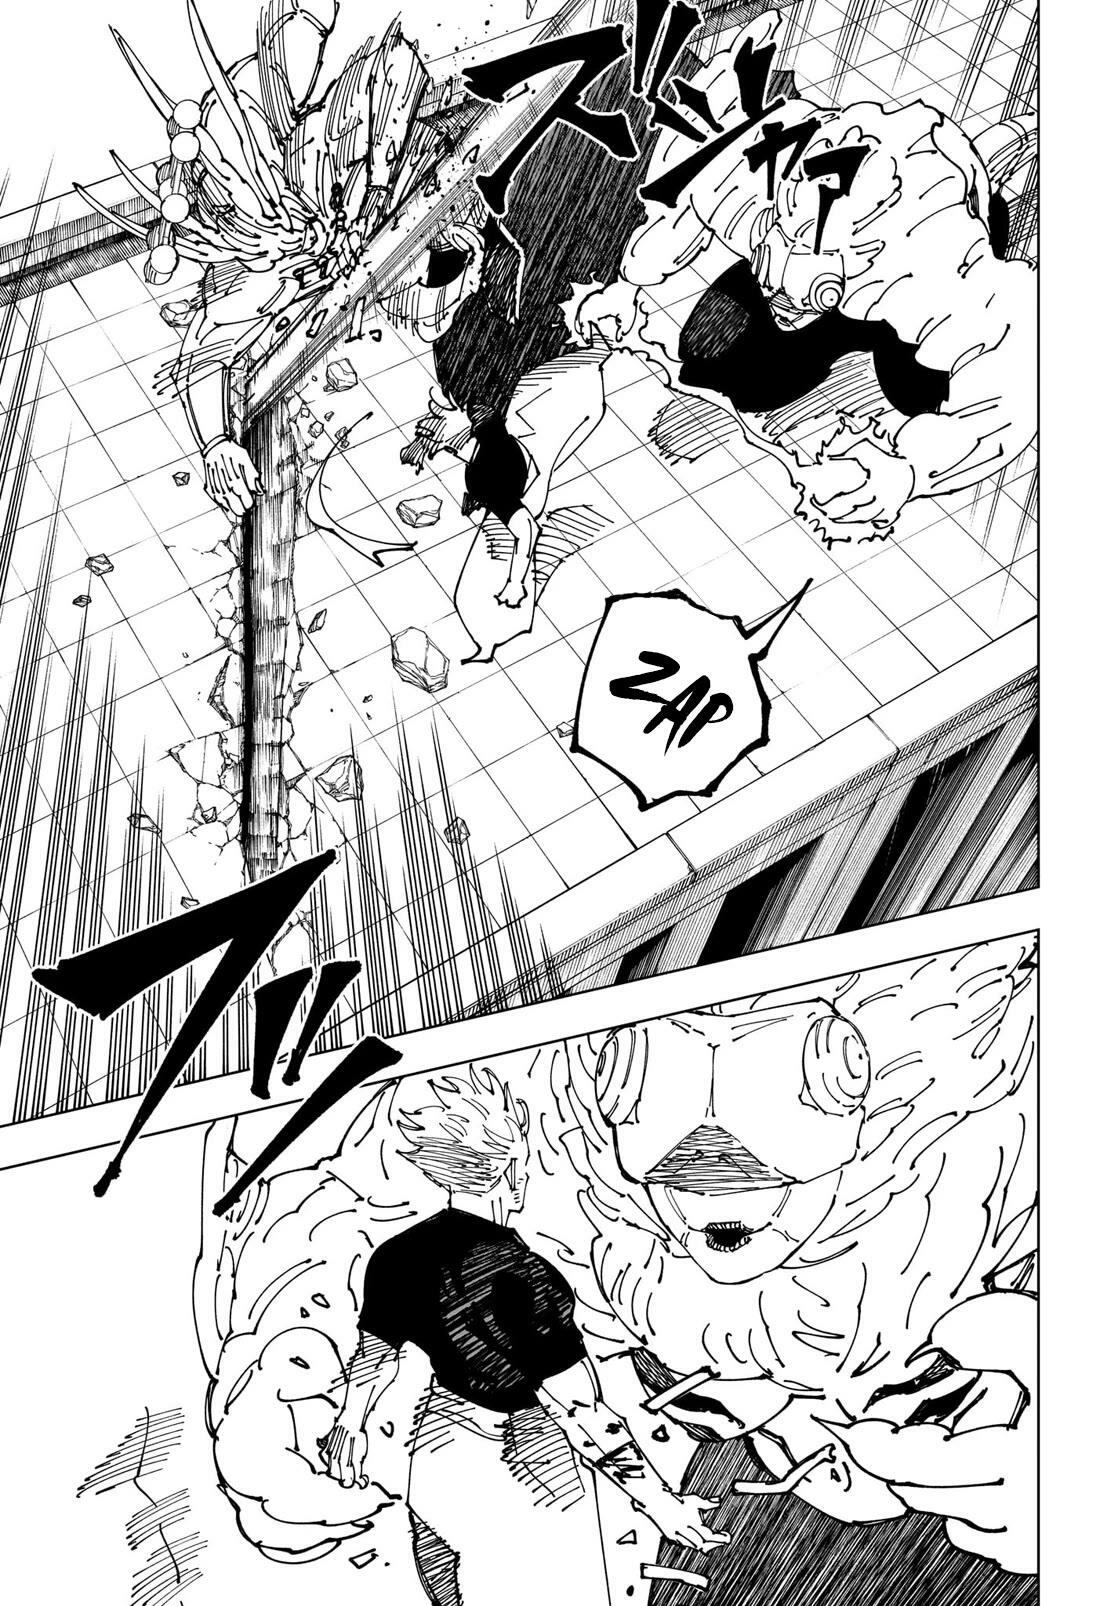 Jujutsu Kaisen Chapter 234: The Decisive Battle In The Uninhabited, Demon-Infested Shinjuku ⑫ page 10 - Mangakakalot